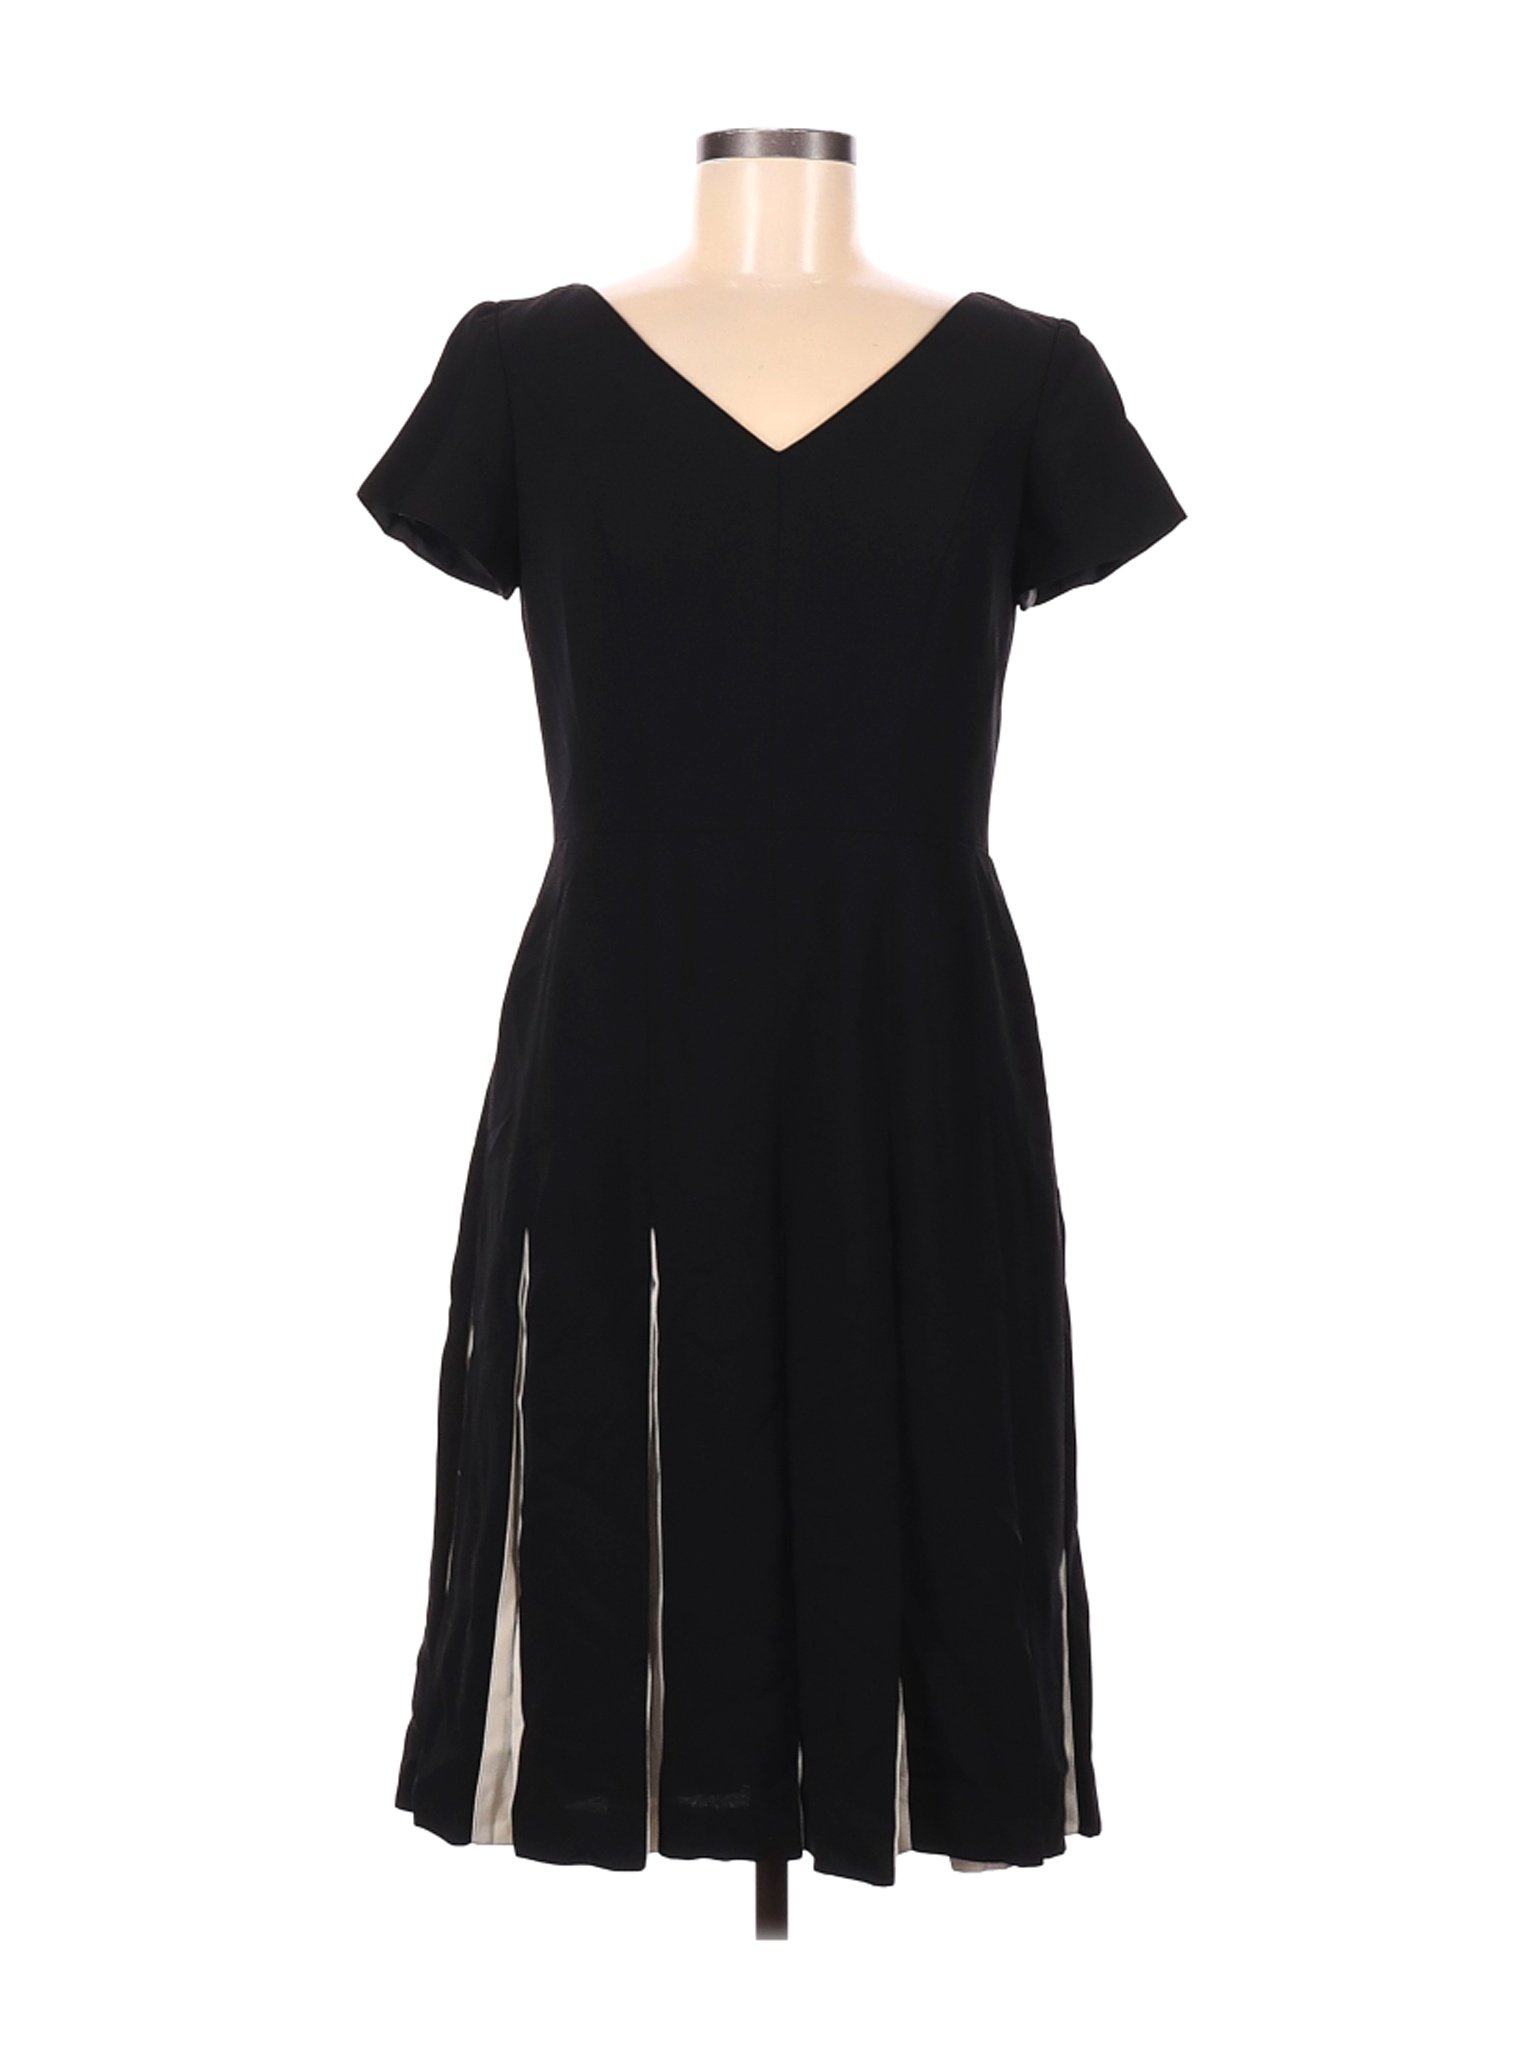 Donna Morgan Women Black Casual Dress 4 | eBay